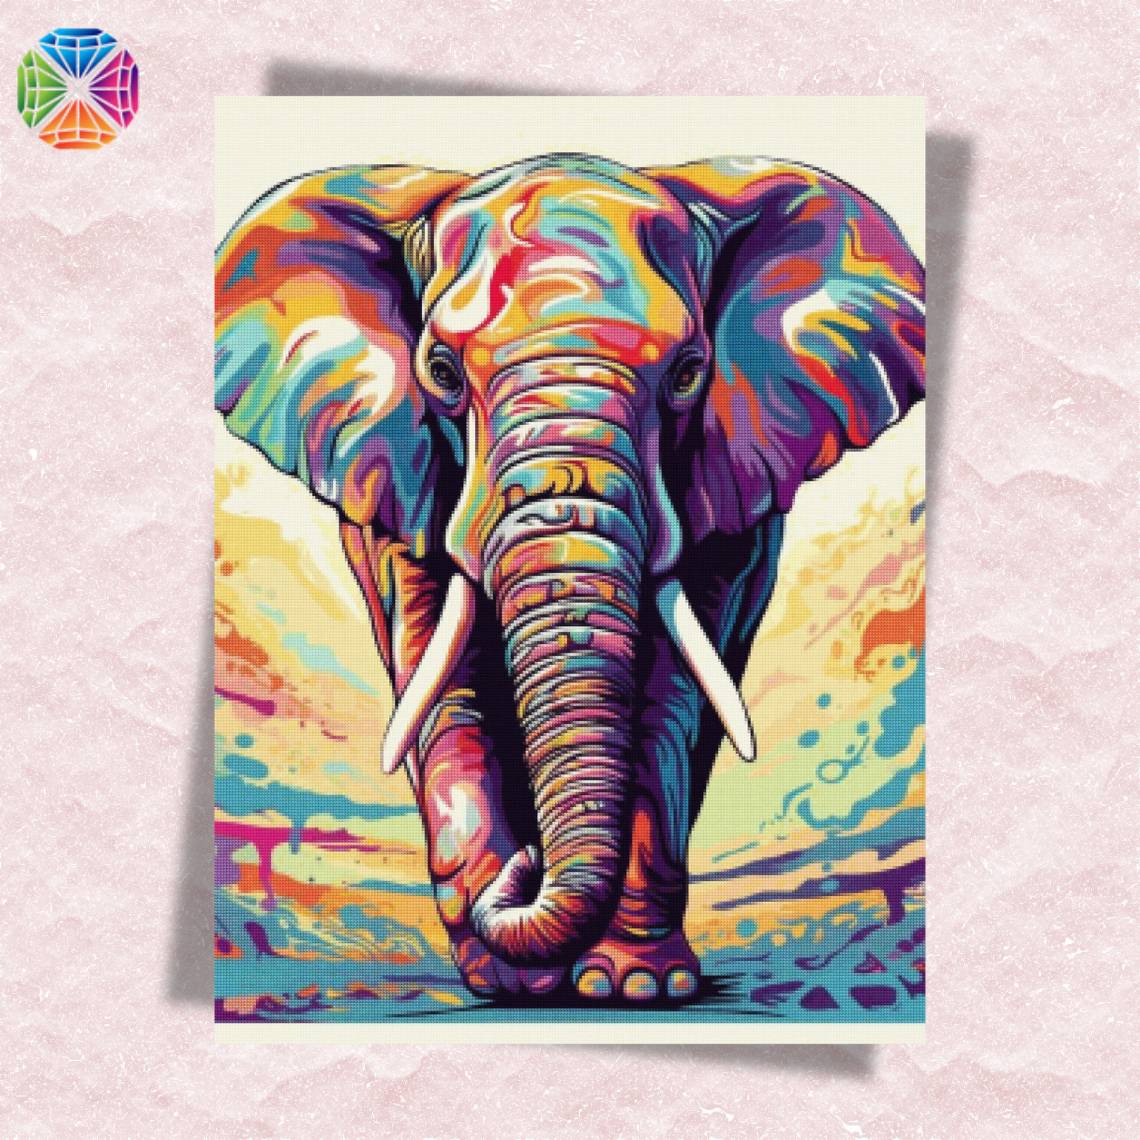 Colorful Elephant - Diamond Painting